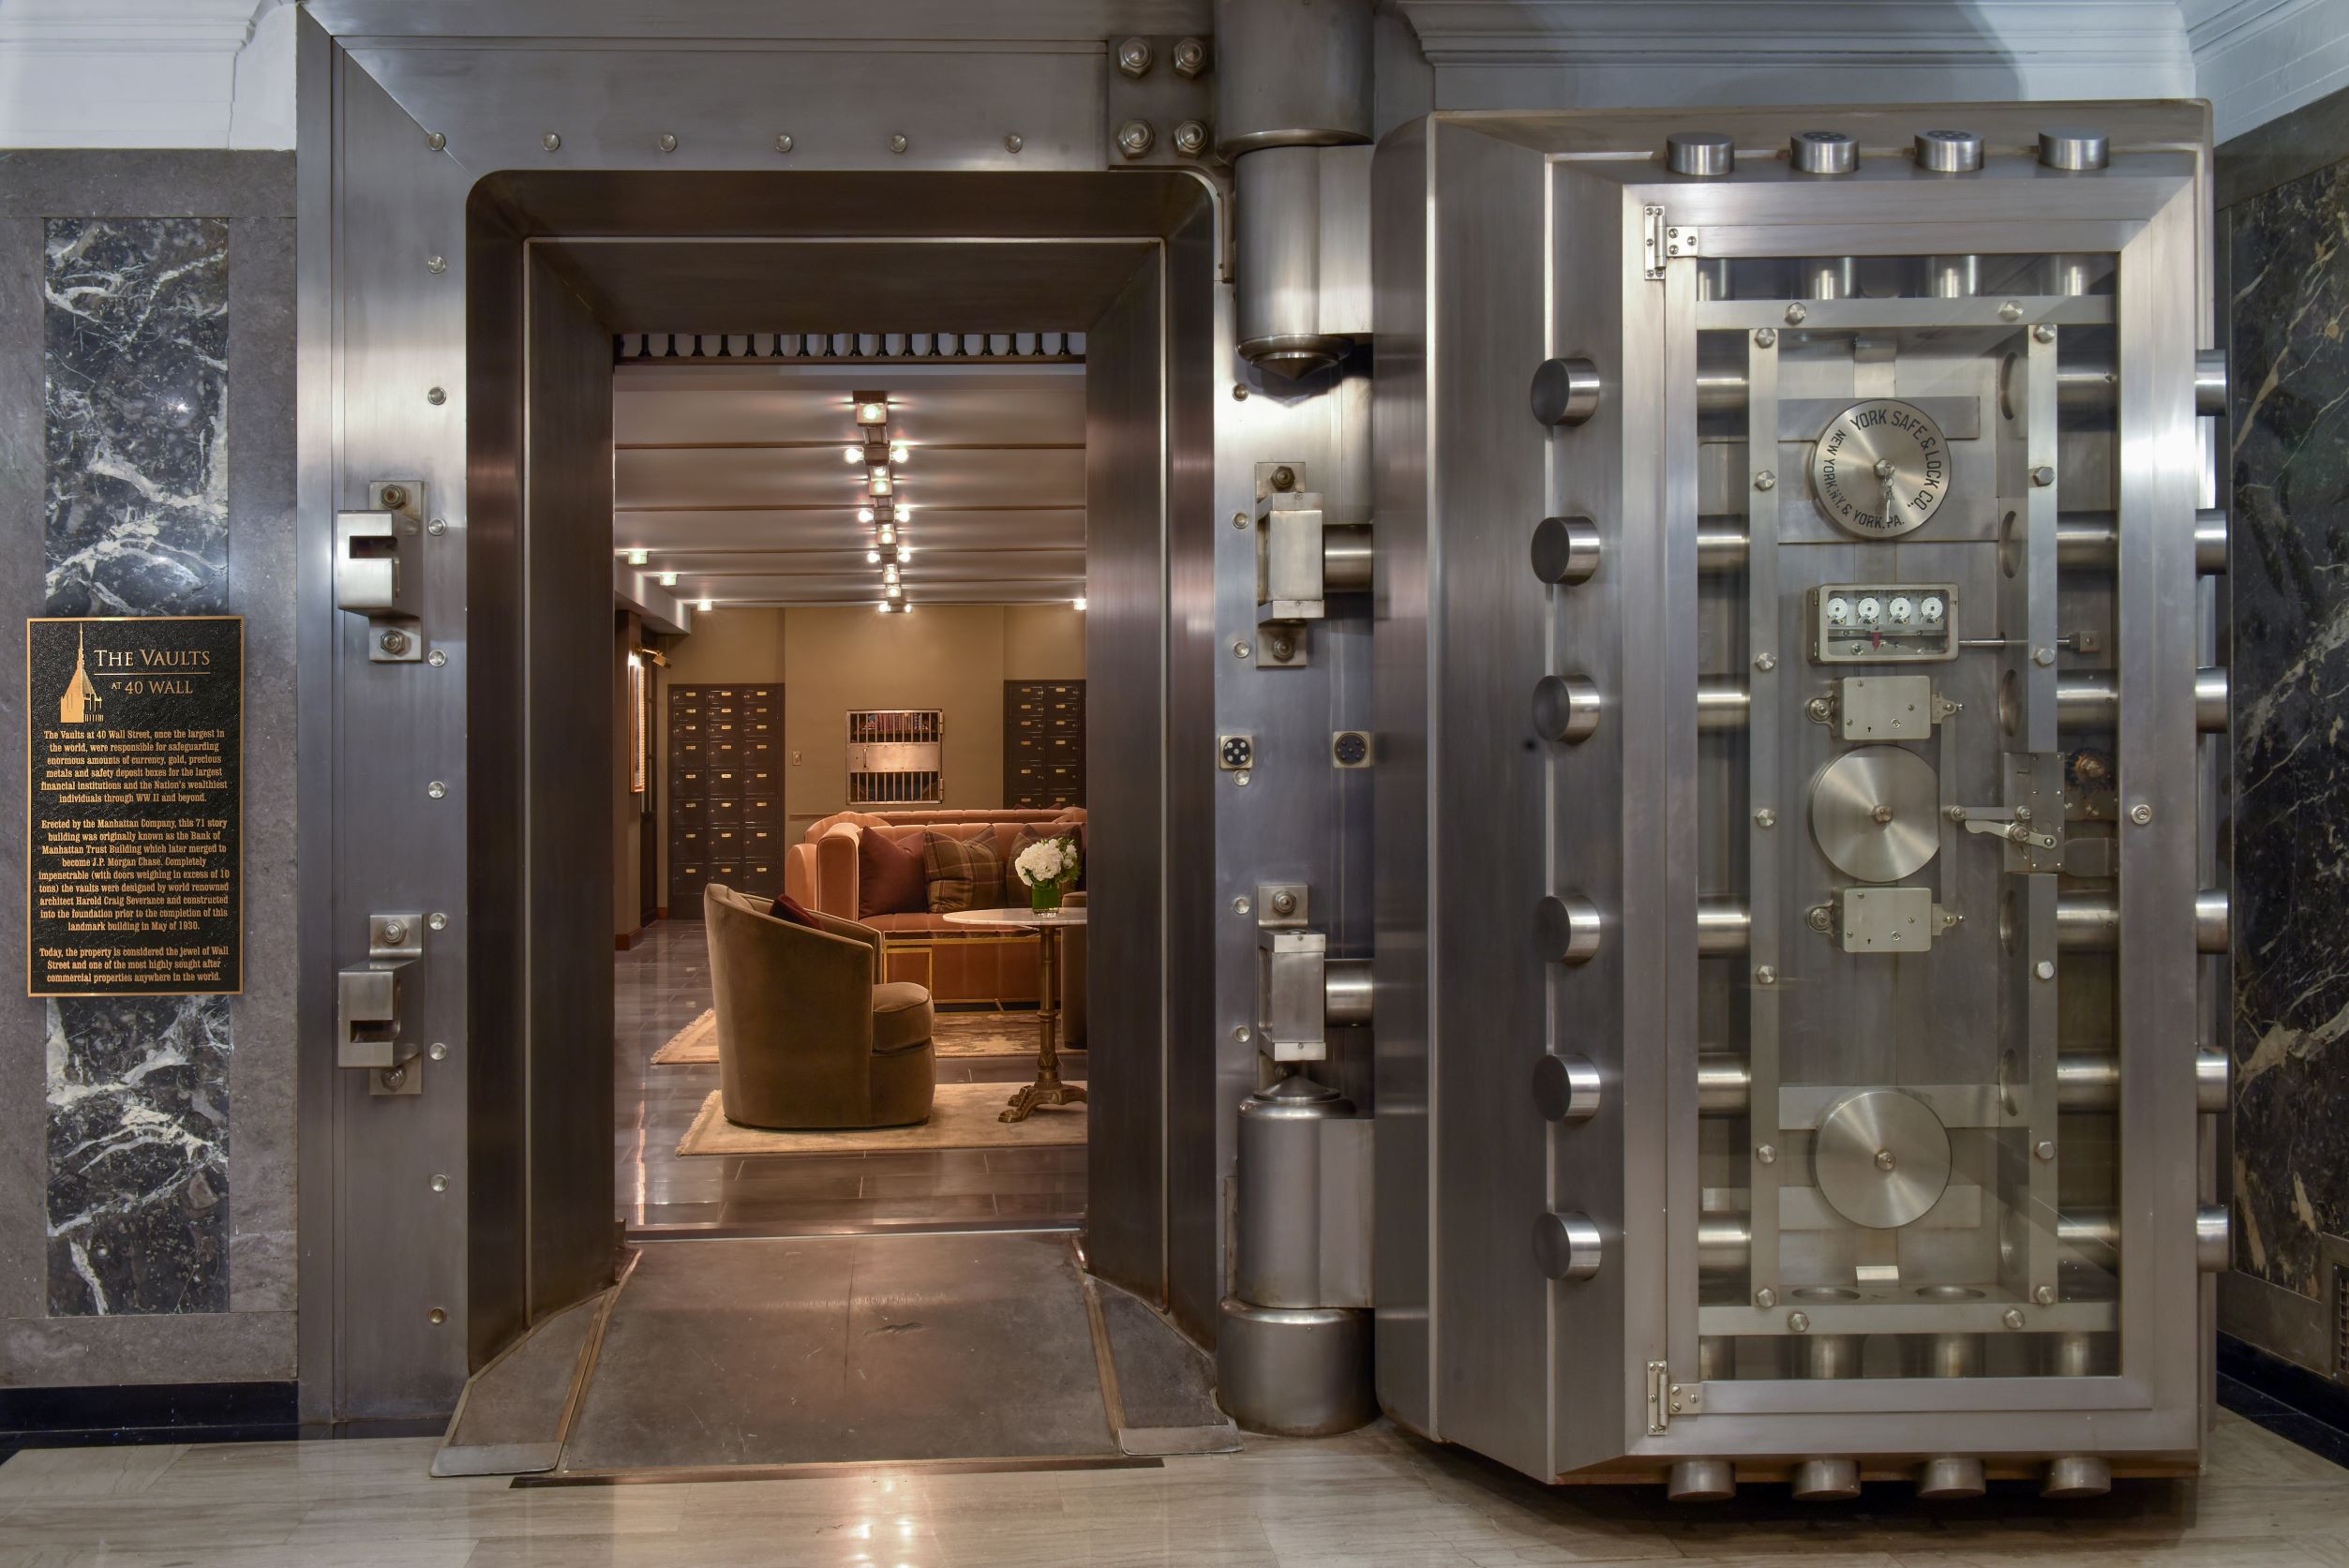 Introducing The Vaults at 40 Wall Street